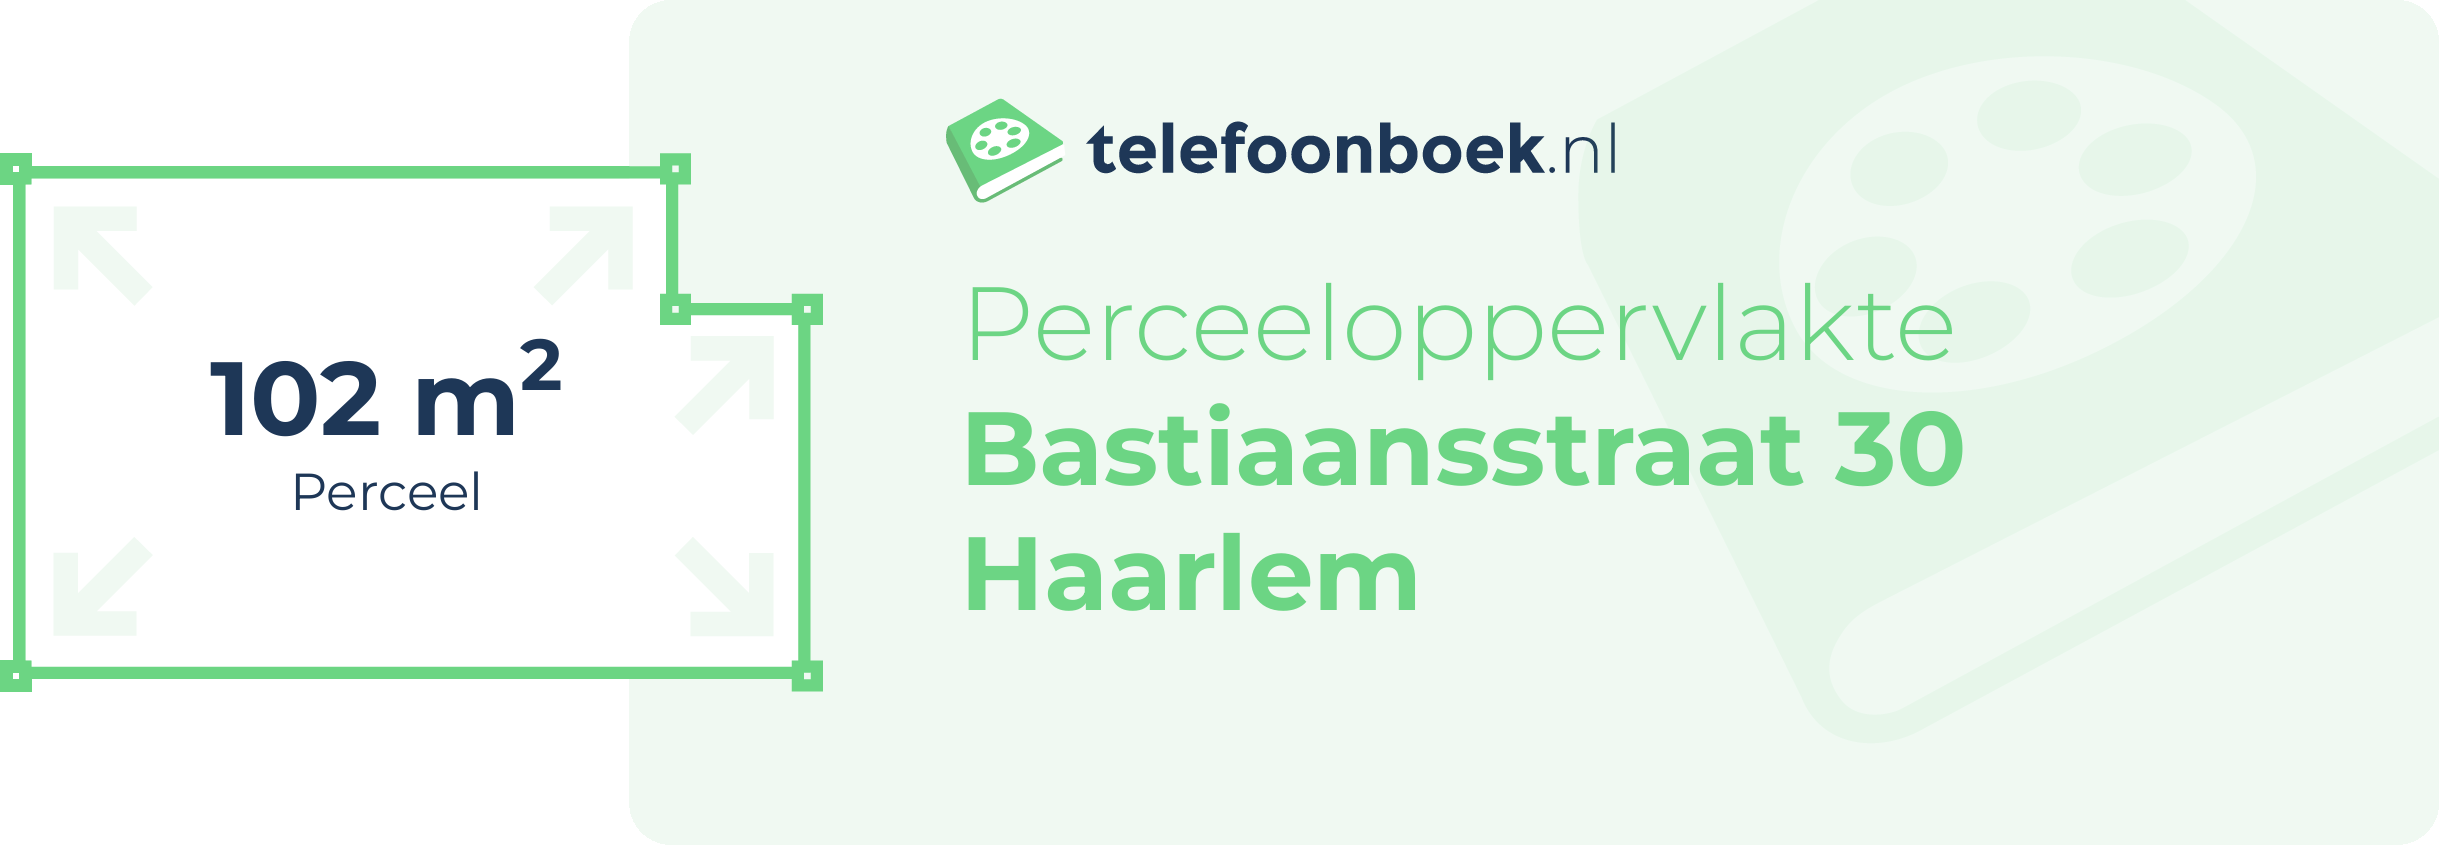 Perceeloppervlakte Bastiaansstraat 30 Haarlem